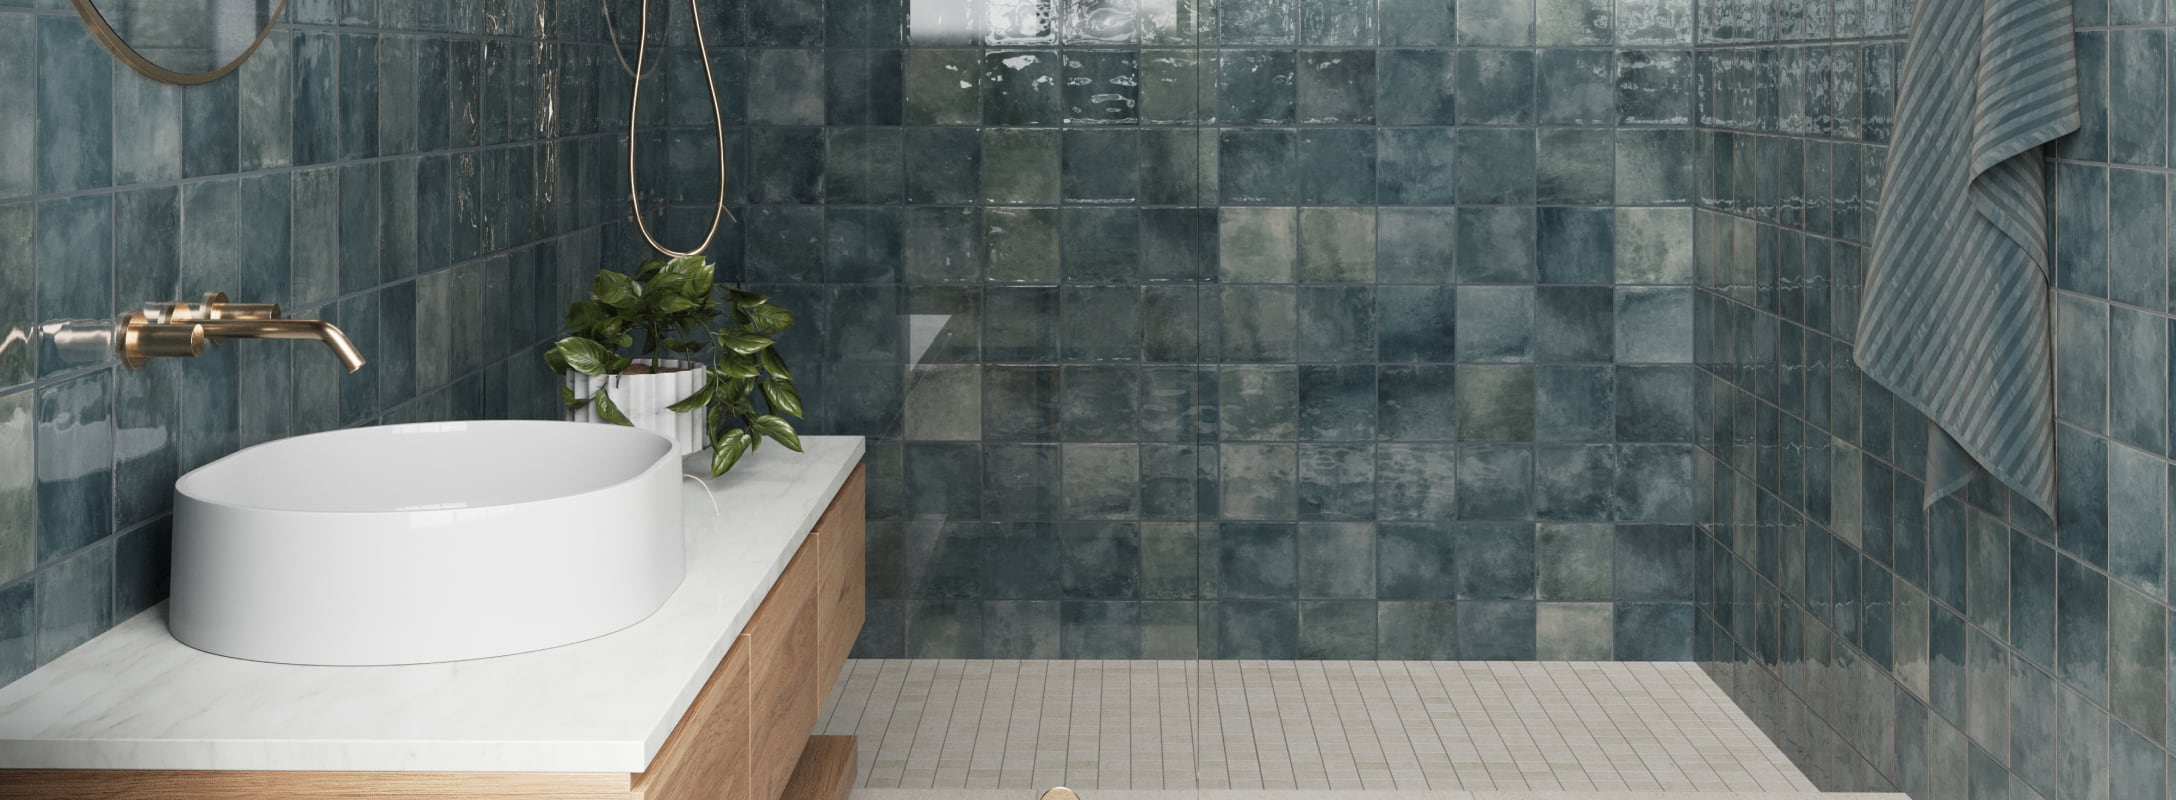 Ceramic Blue Tiles in a sleek bathroom setting, exuding modern sophistication and tranquil elegance.